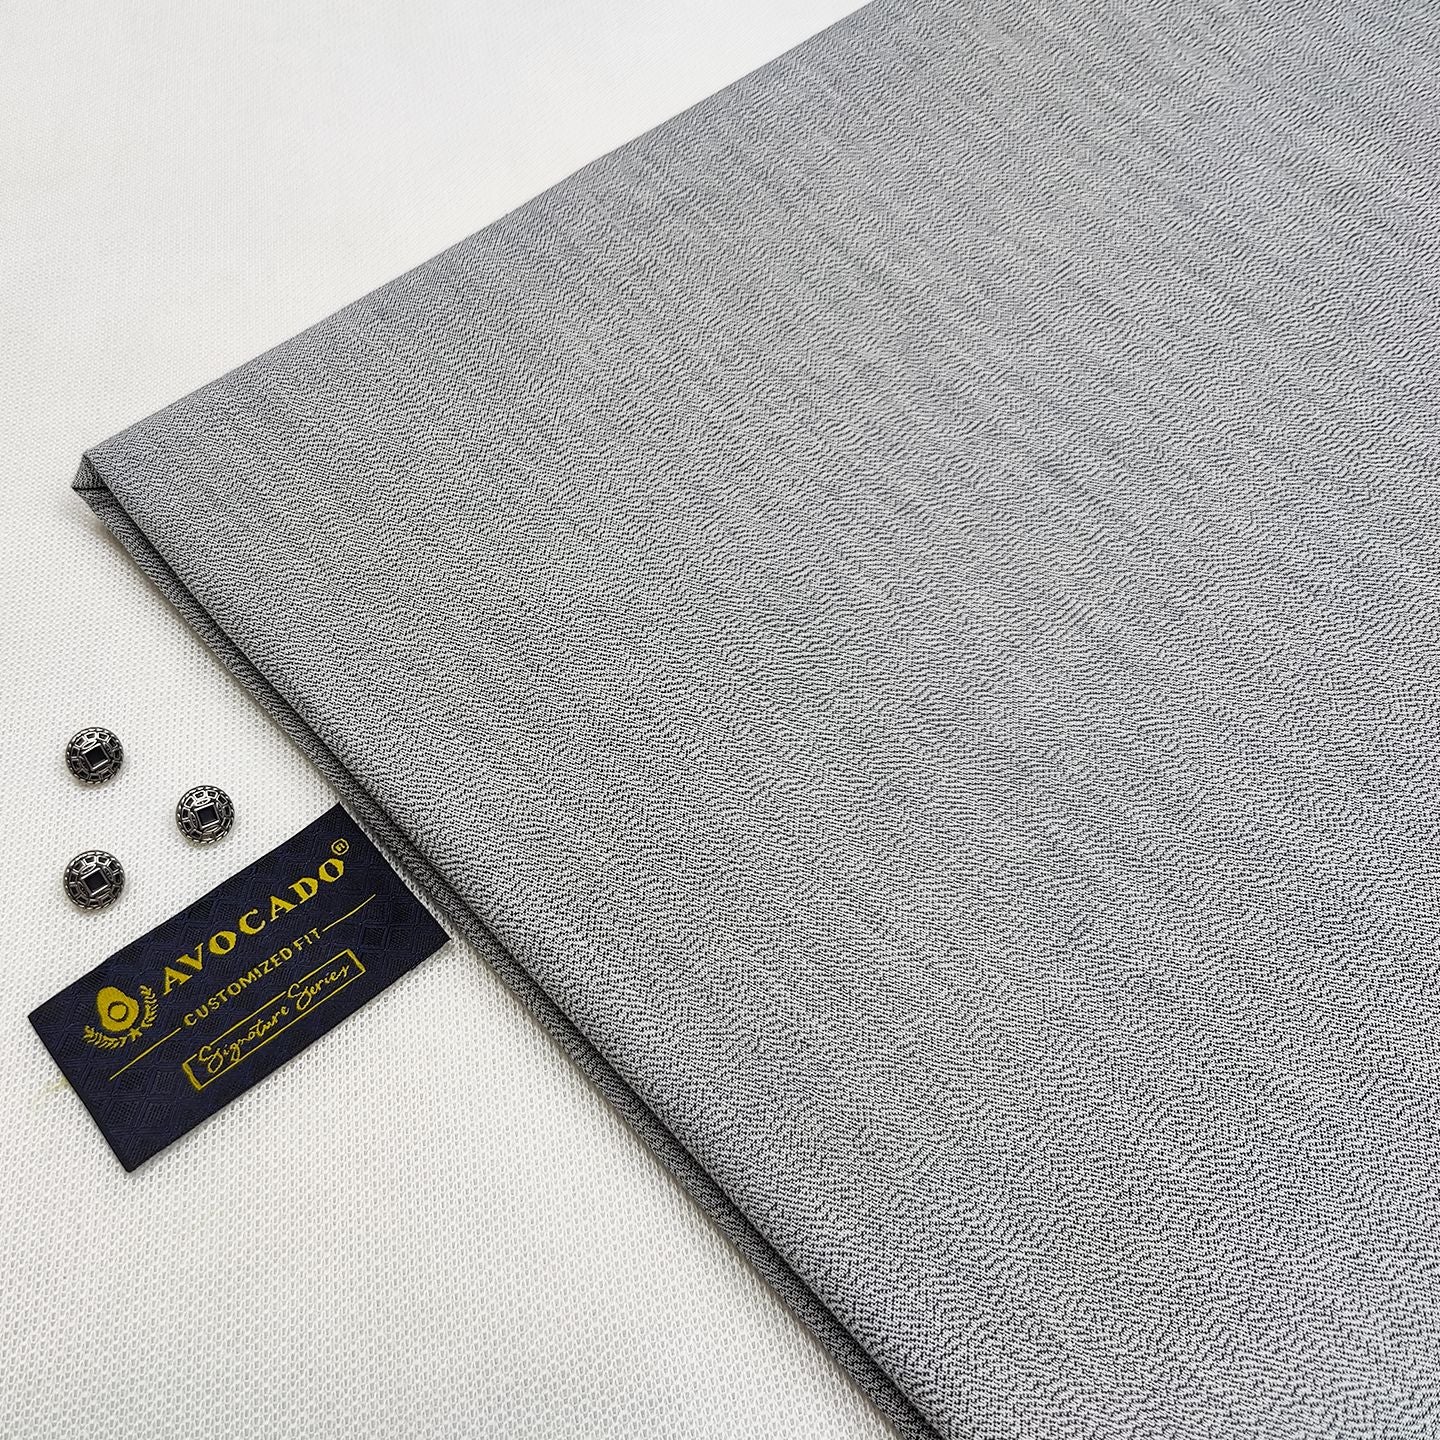 Light Grey Self Texture Mix kameez shalwar Fabric with Buttons & label